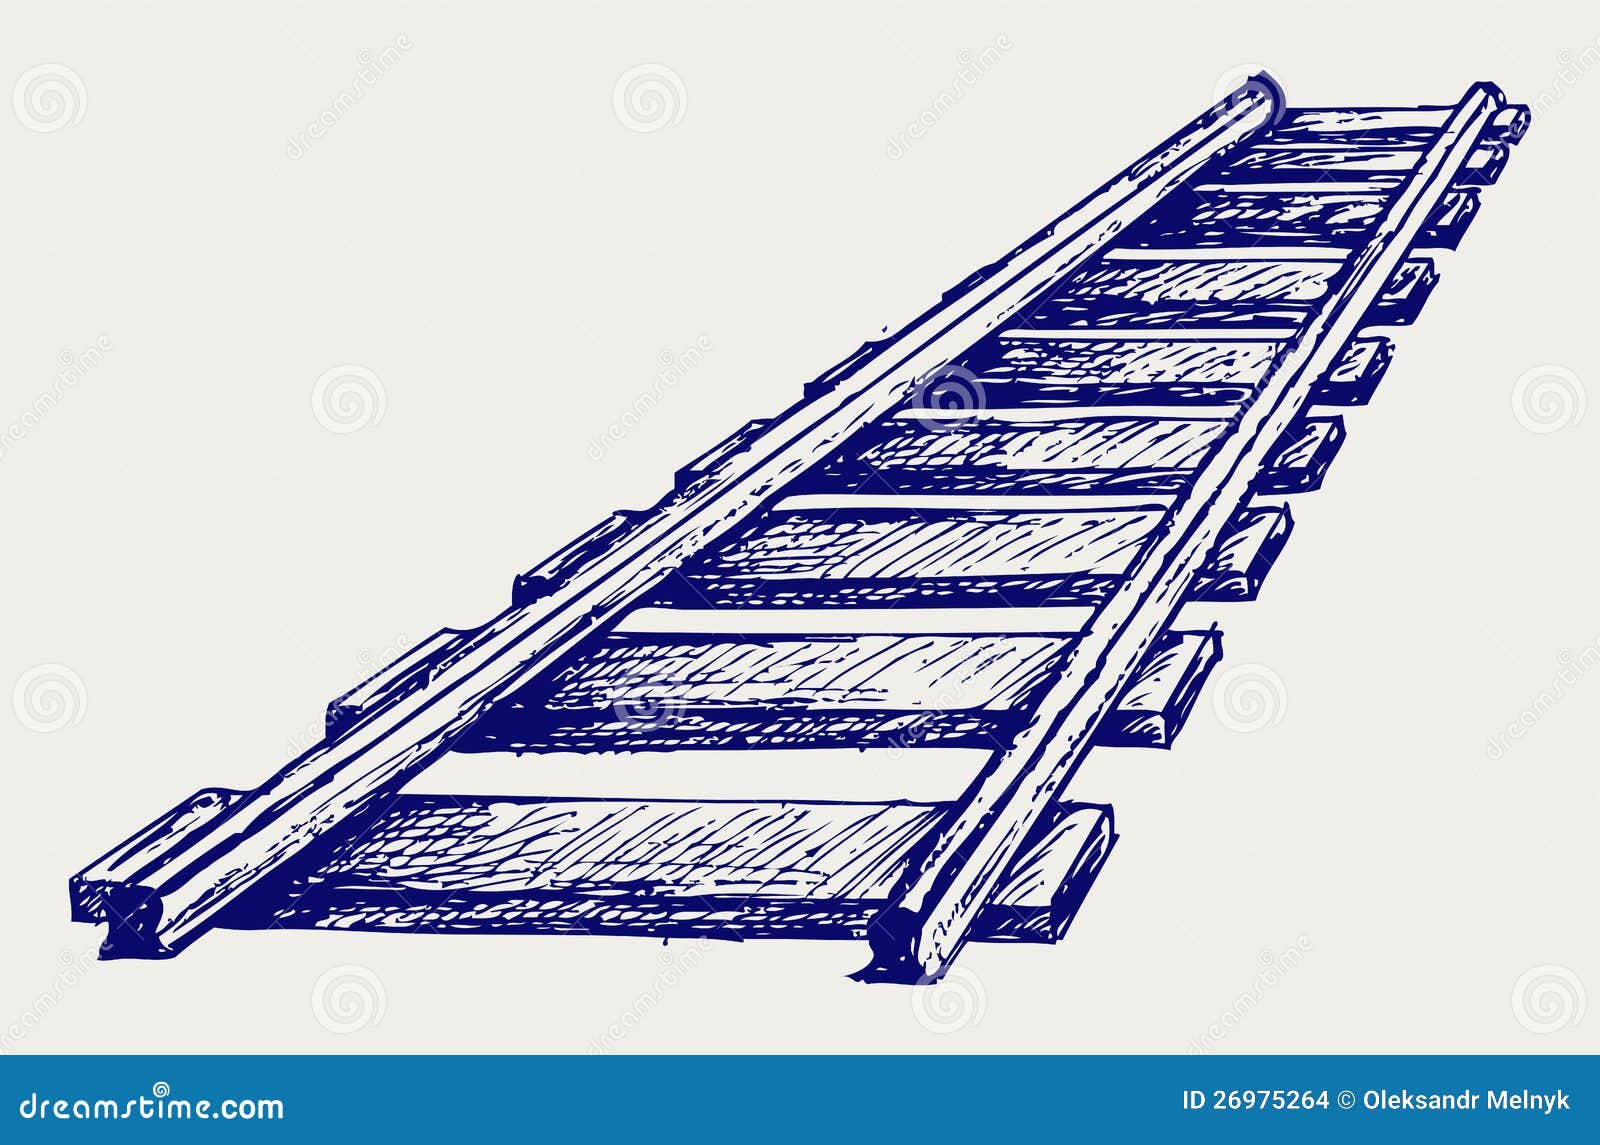 Railroad sketch stock vector. Illustration of road, rail - 26975264